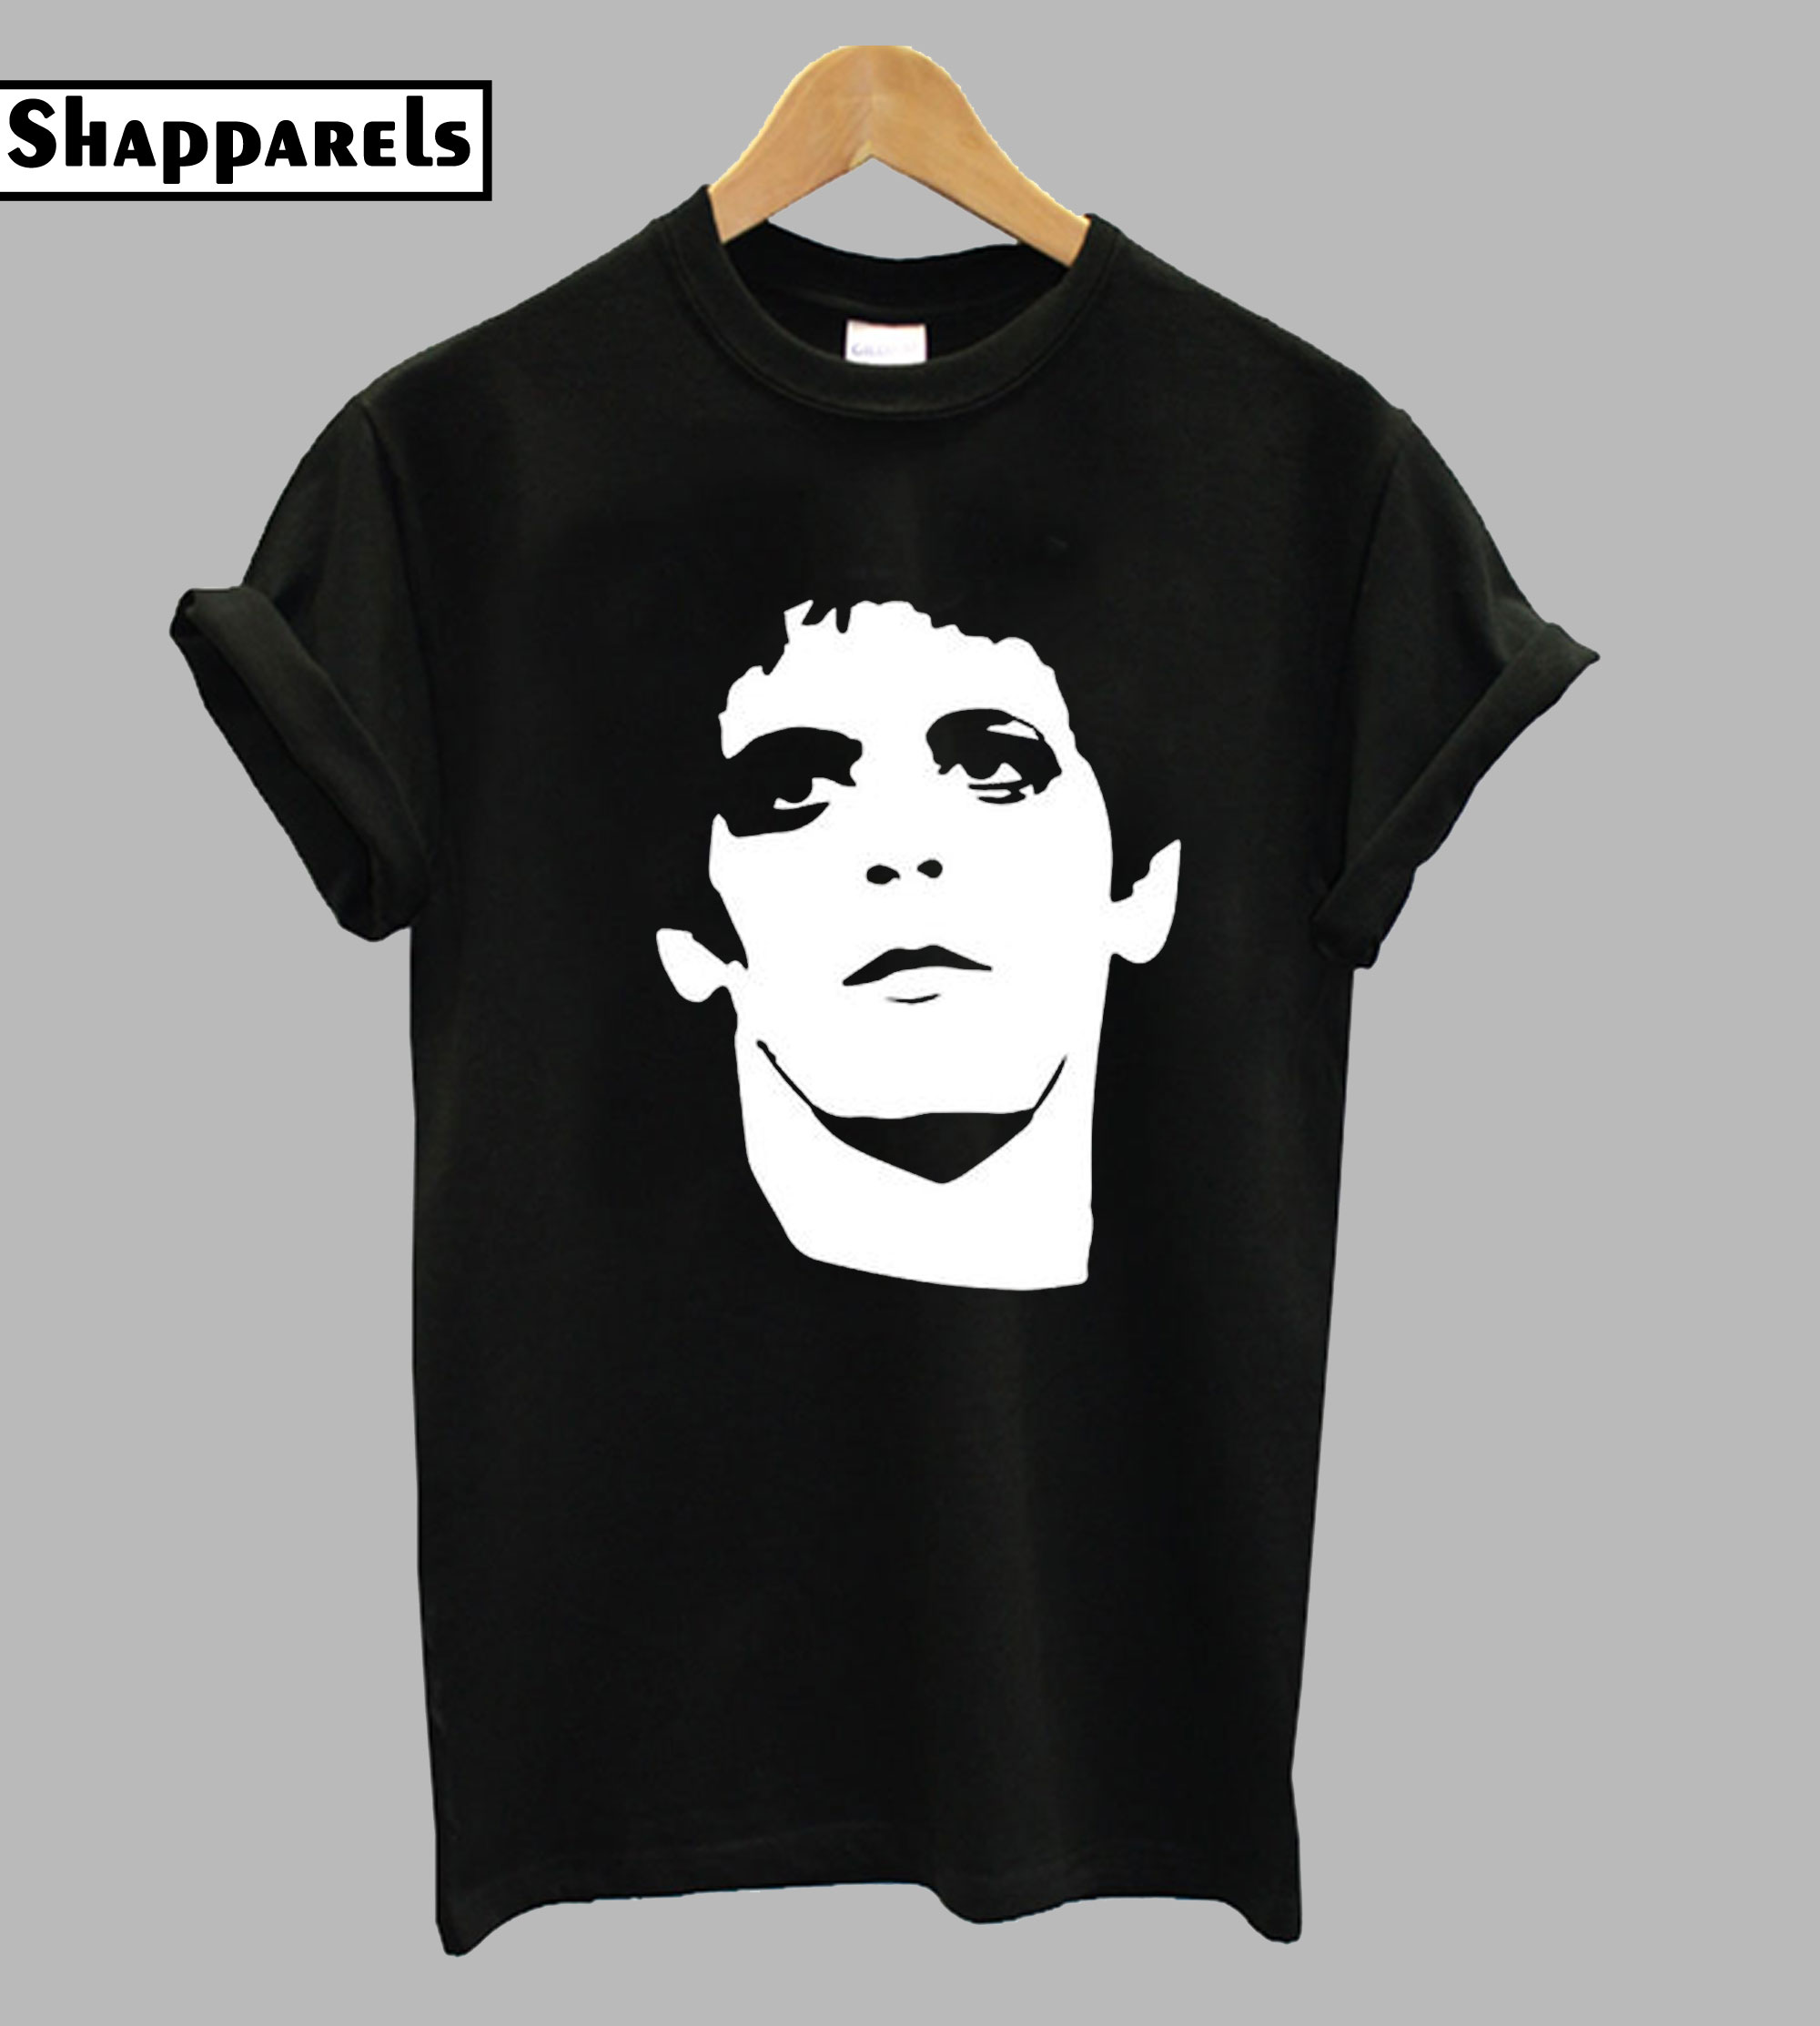 Lou Reed Transformer T-Shirt